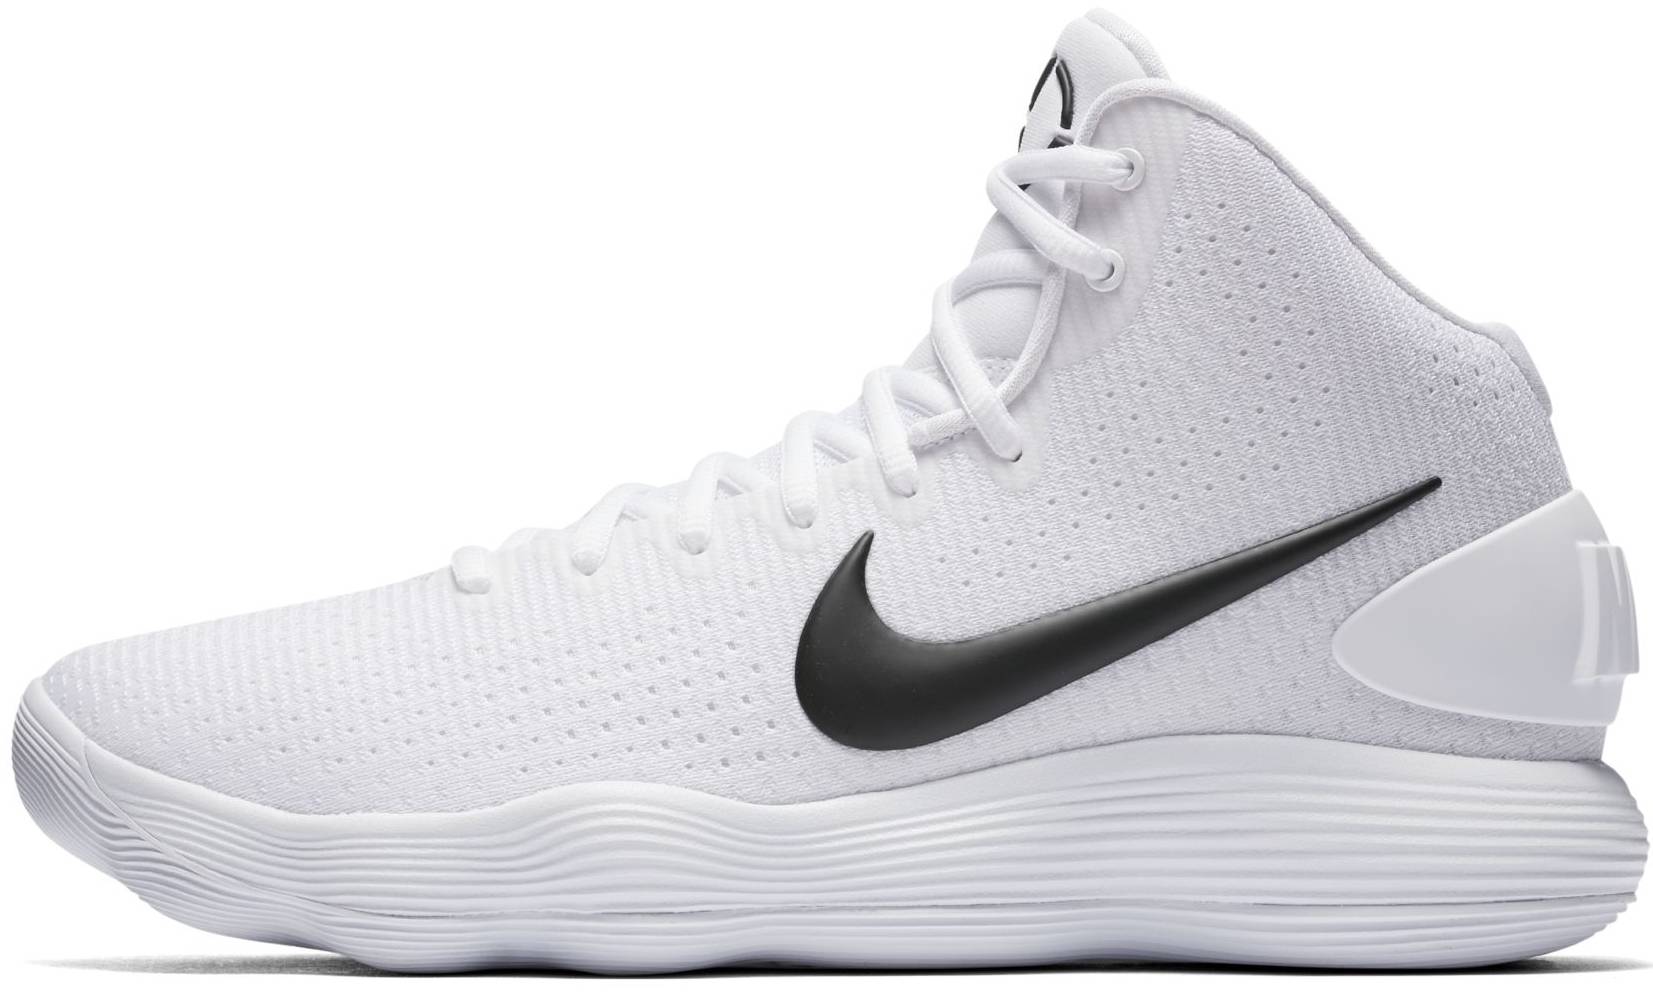 white hyperdunk basketball shoes